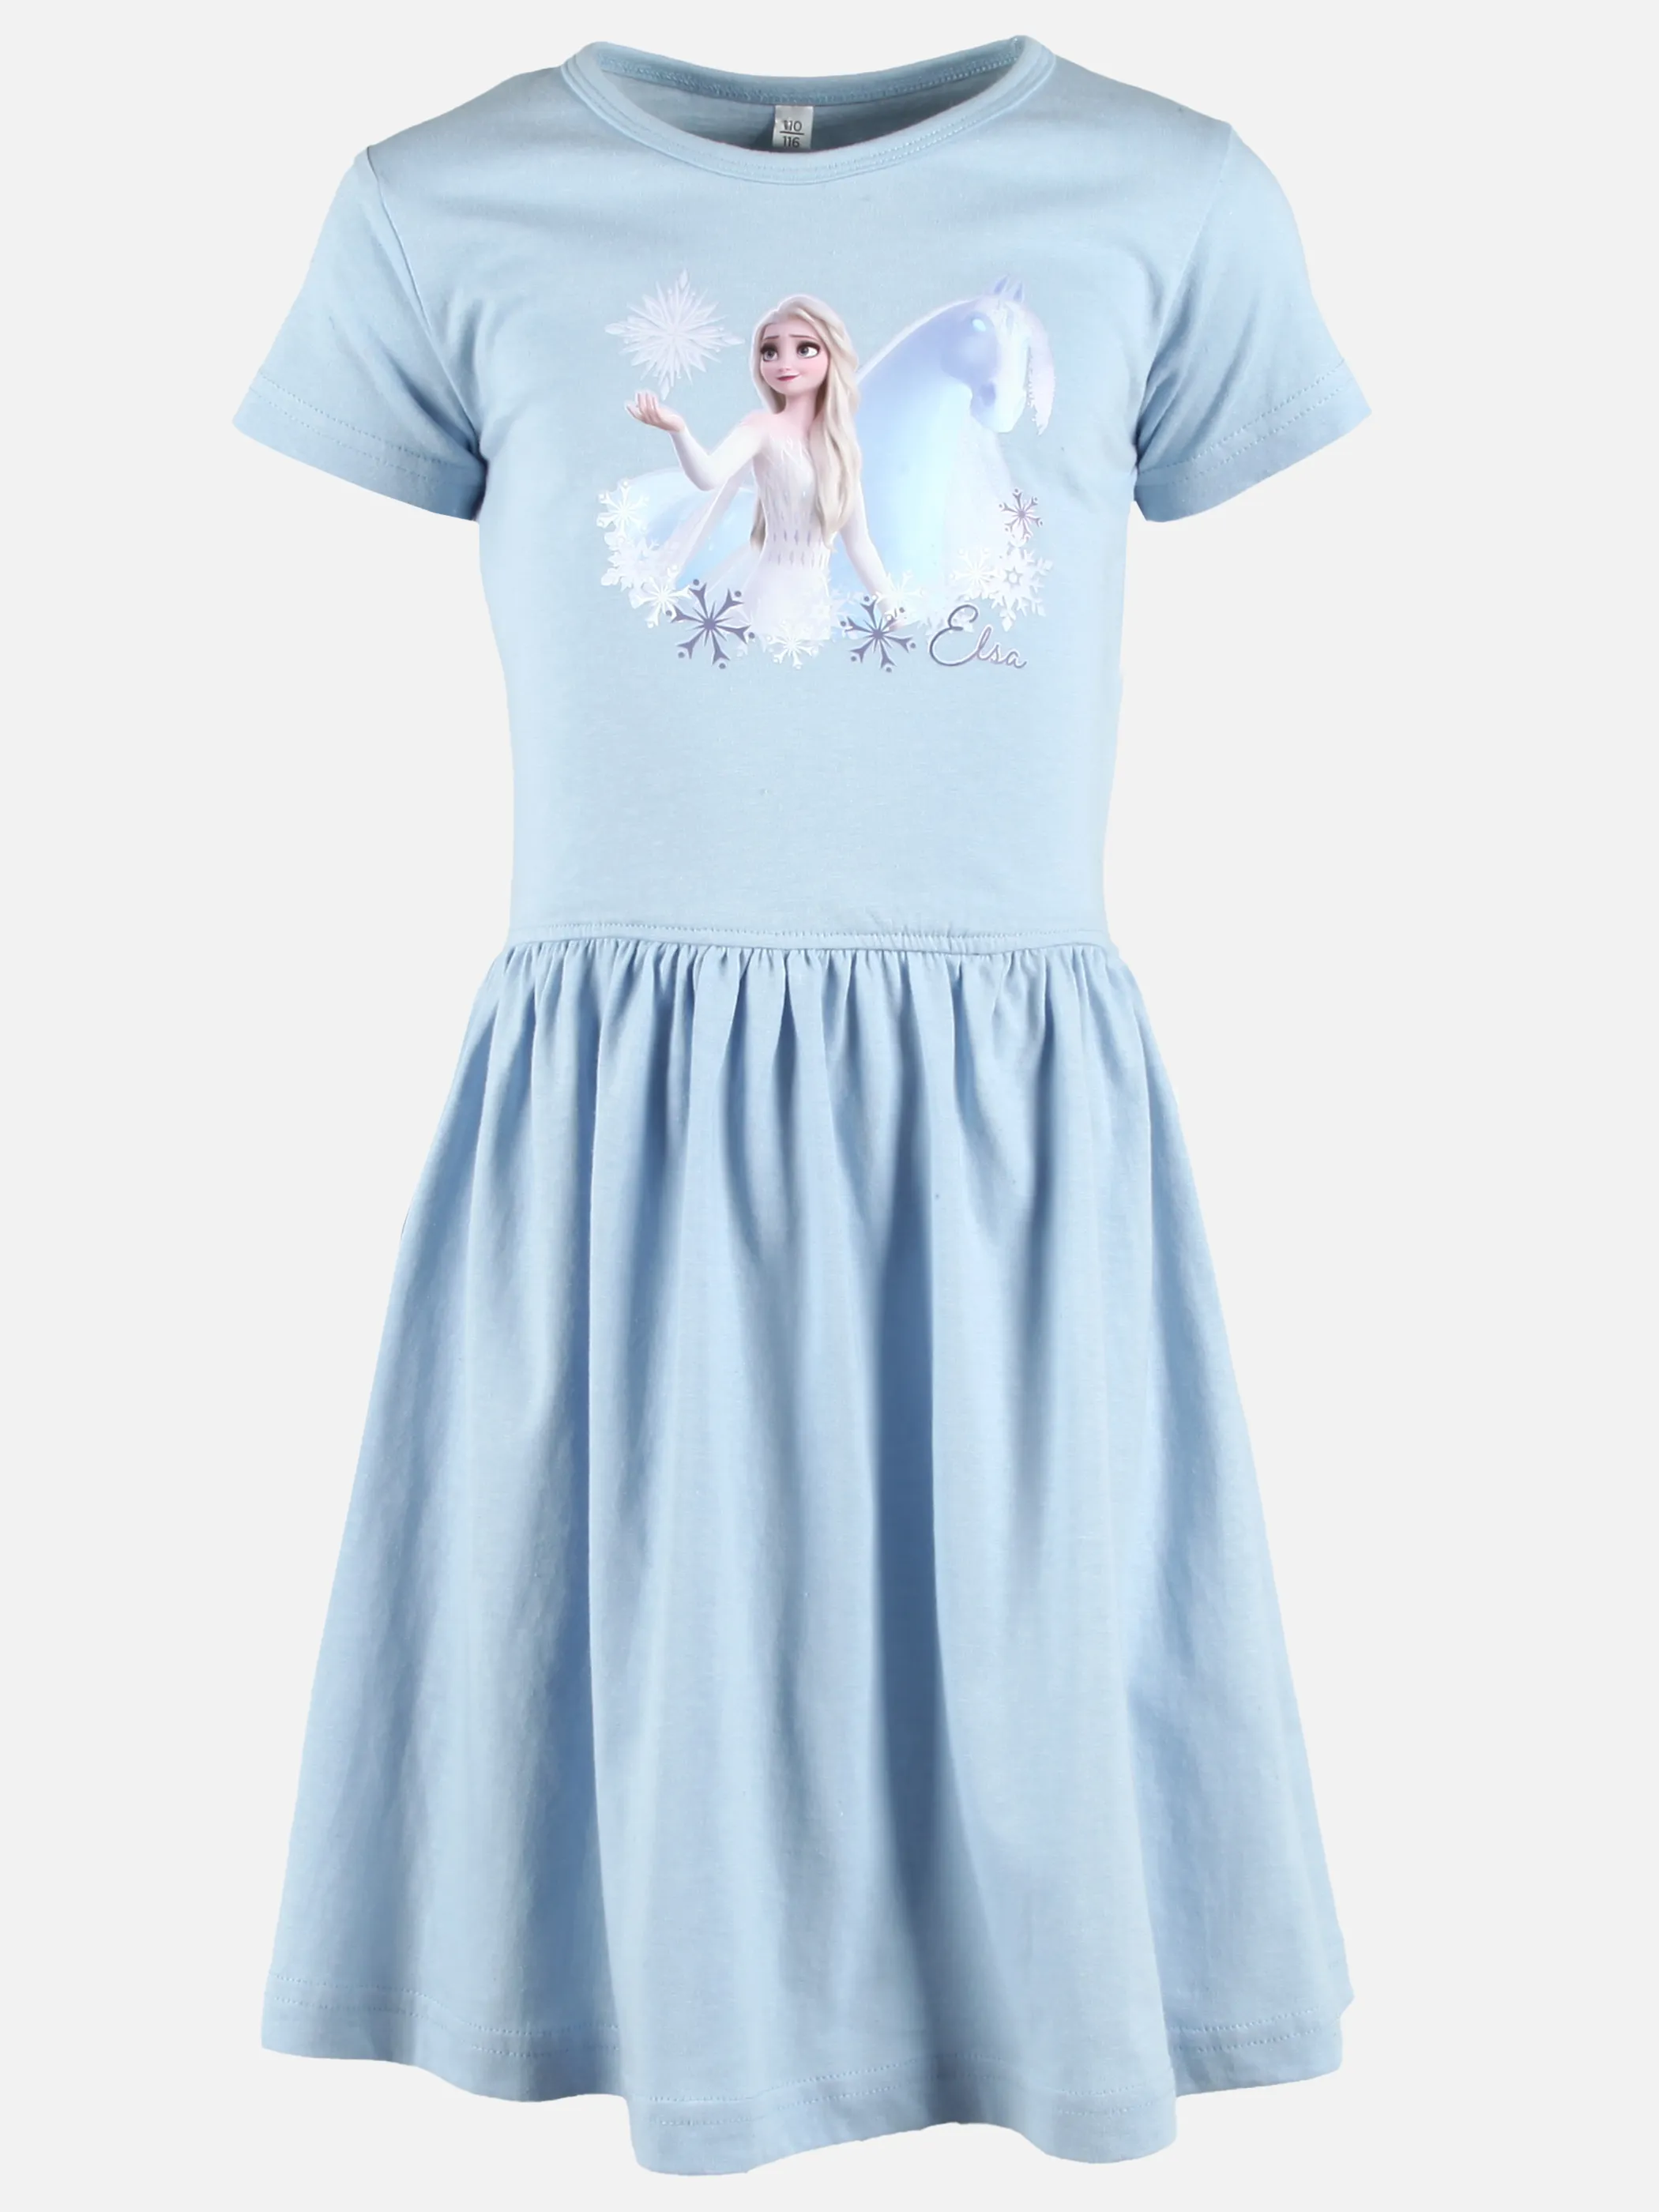 Frozen KM Kleid mit Frozen Frontdruck in hellblau Blau 892450 HELLBLAU 1